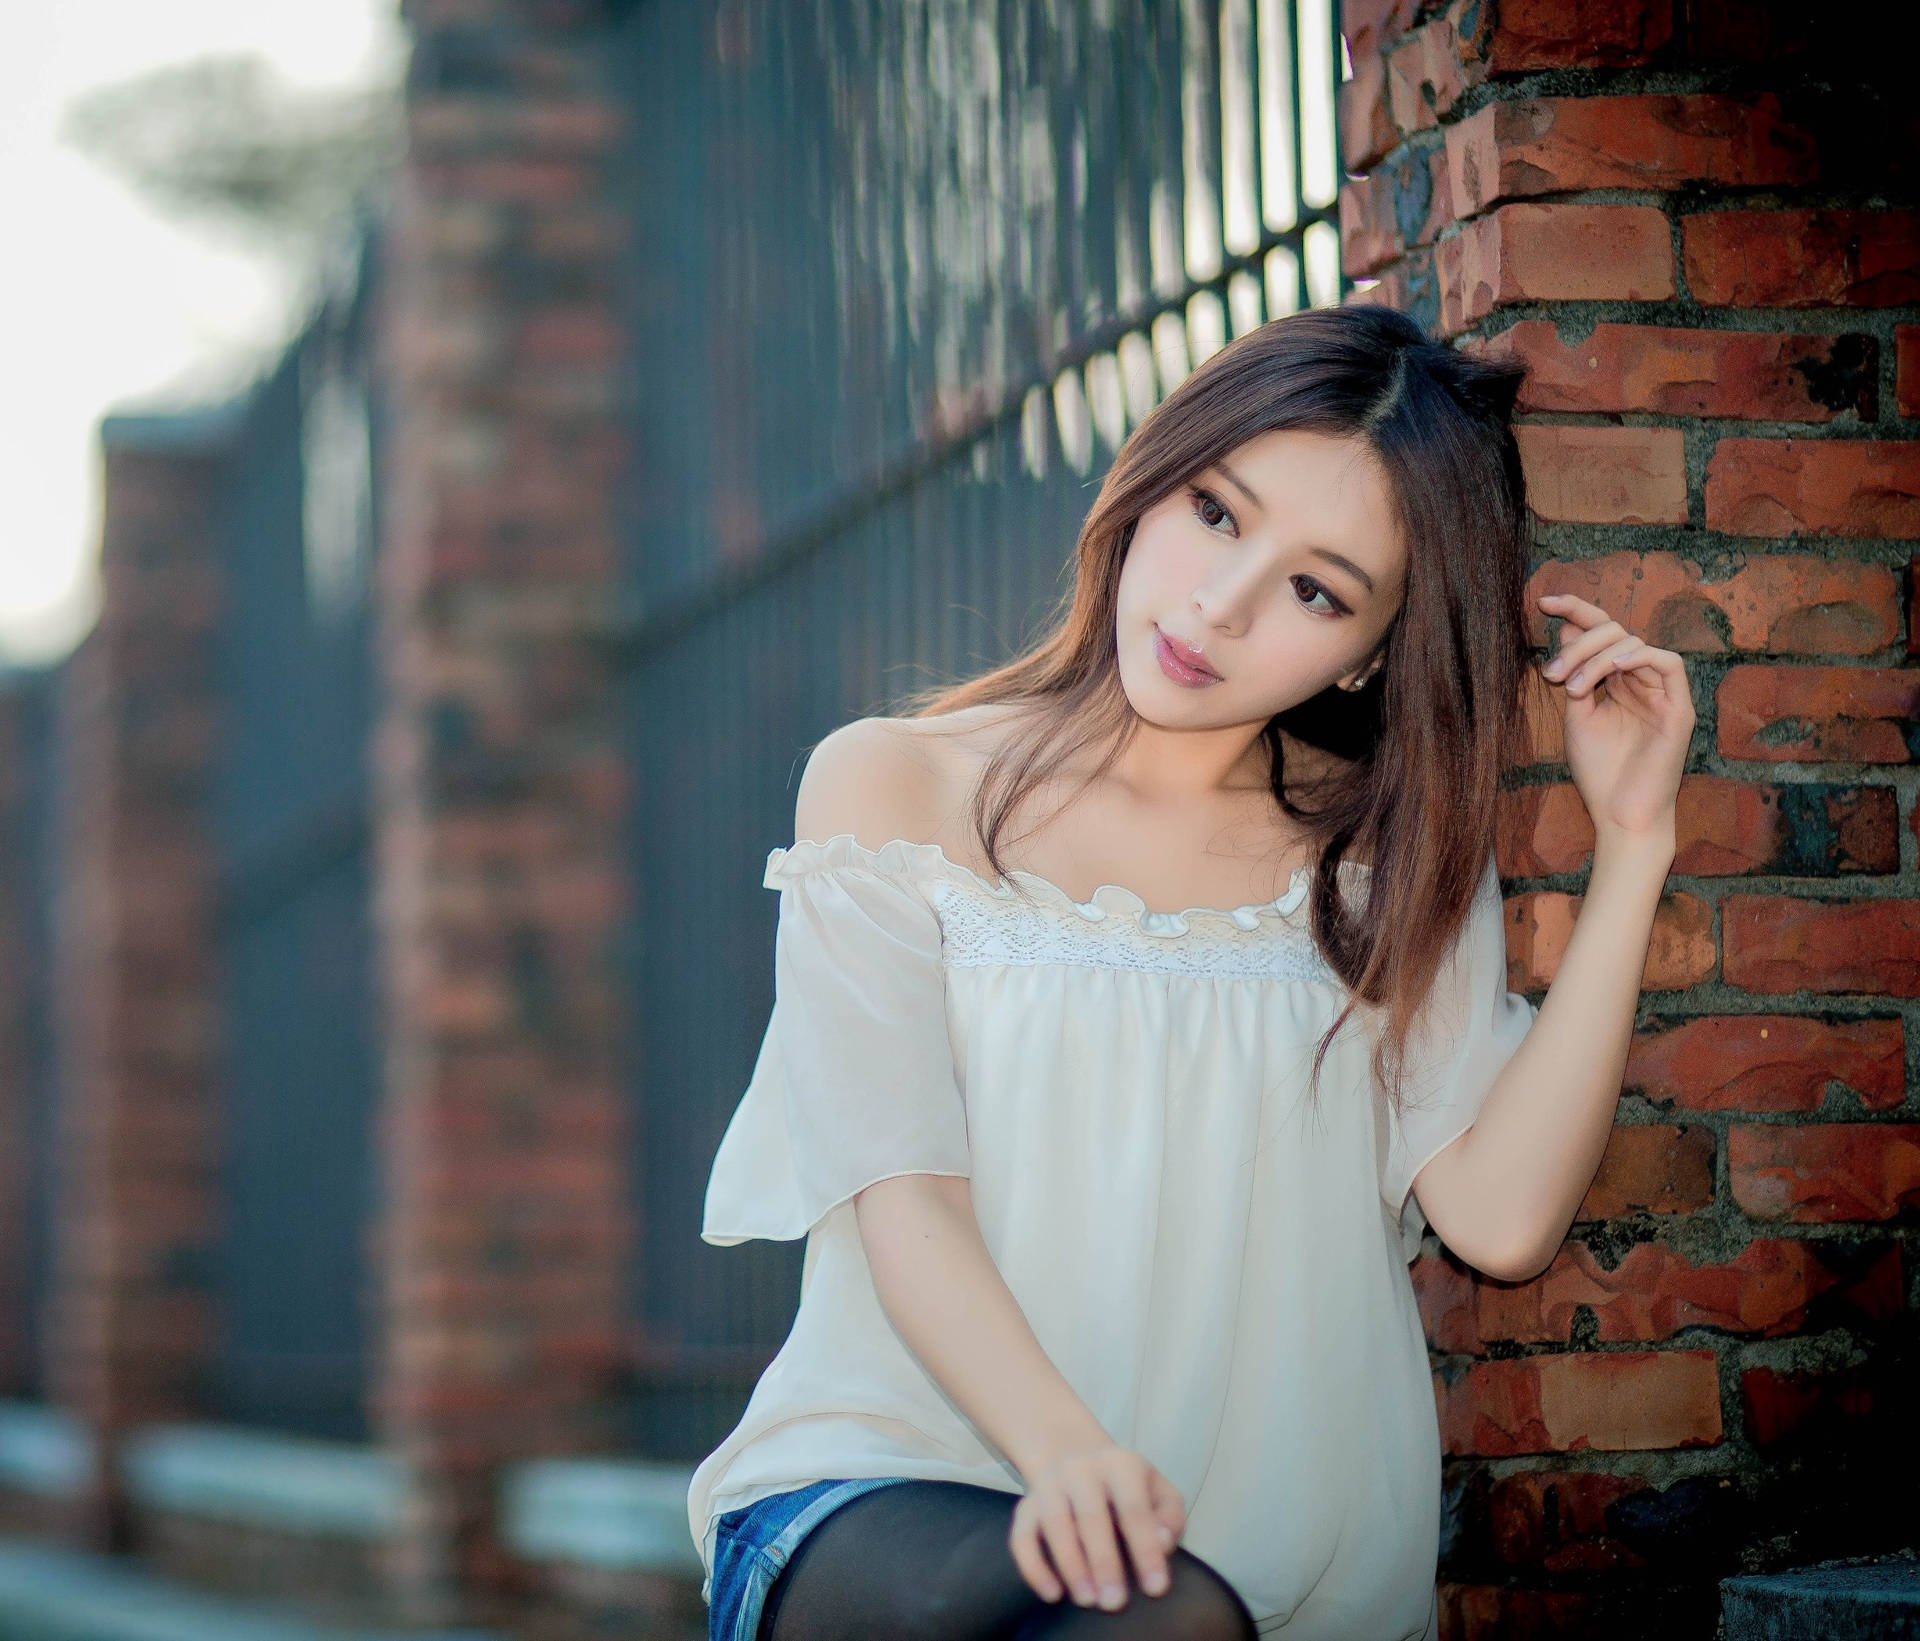 Cute asian girl wallpaper